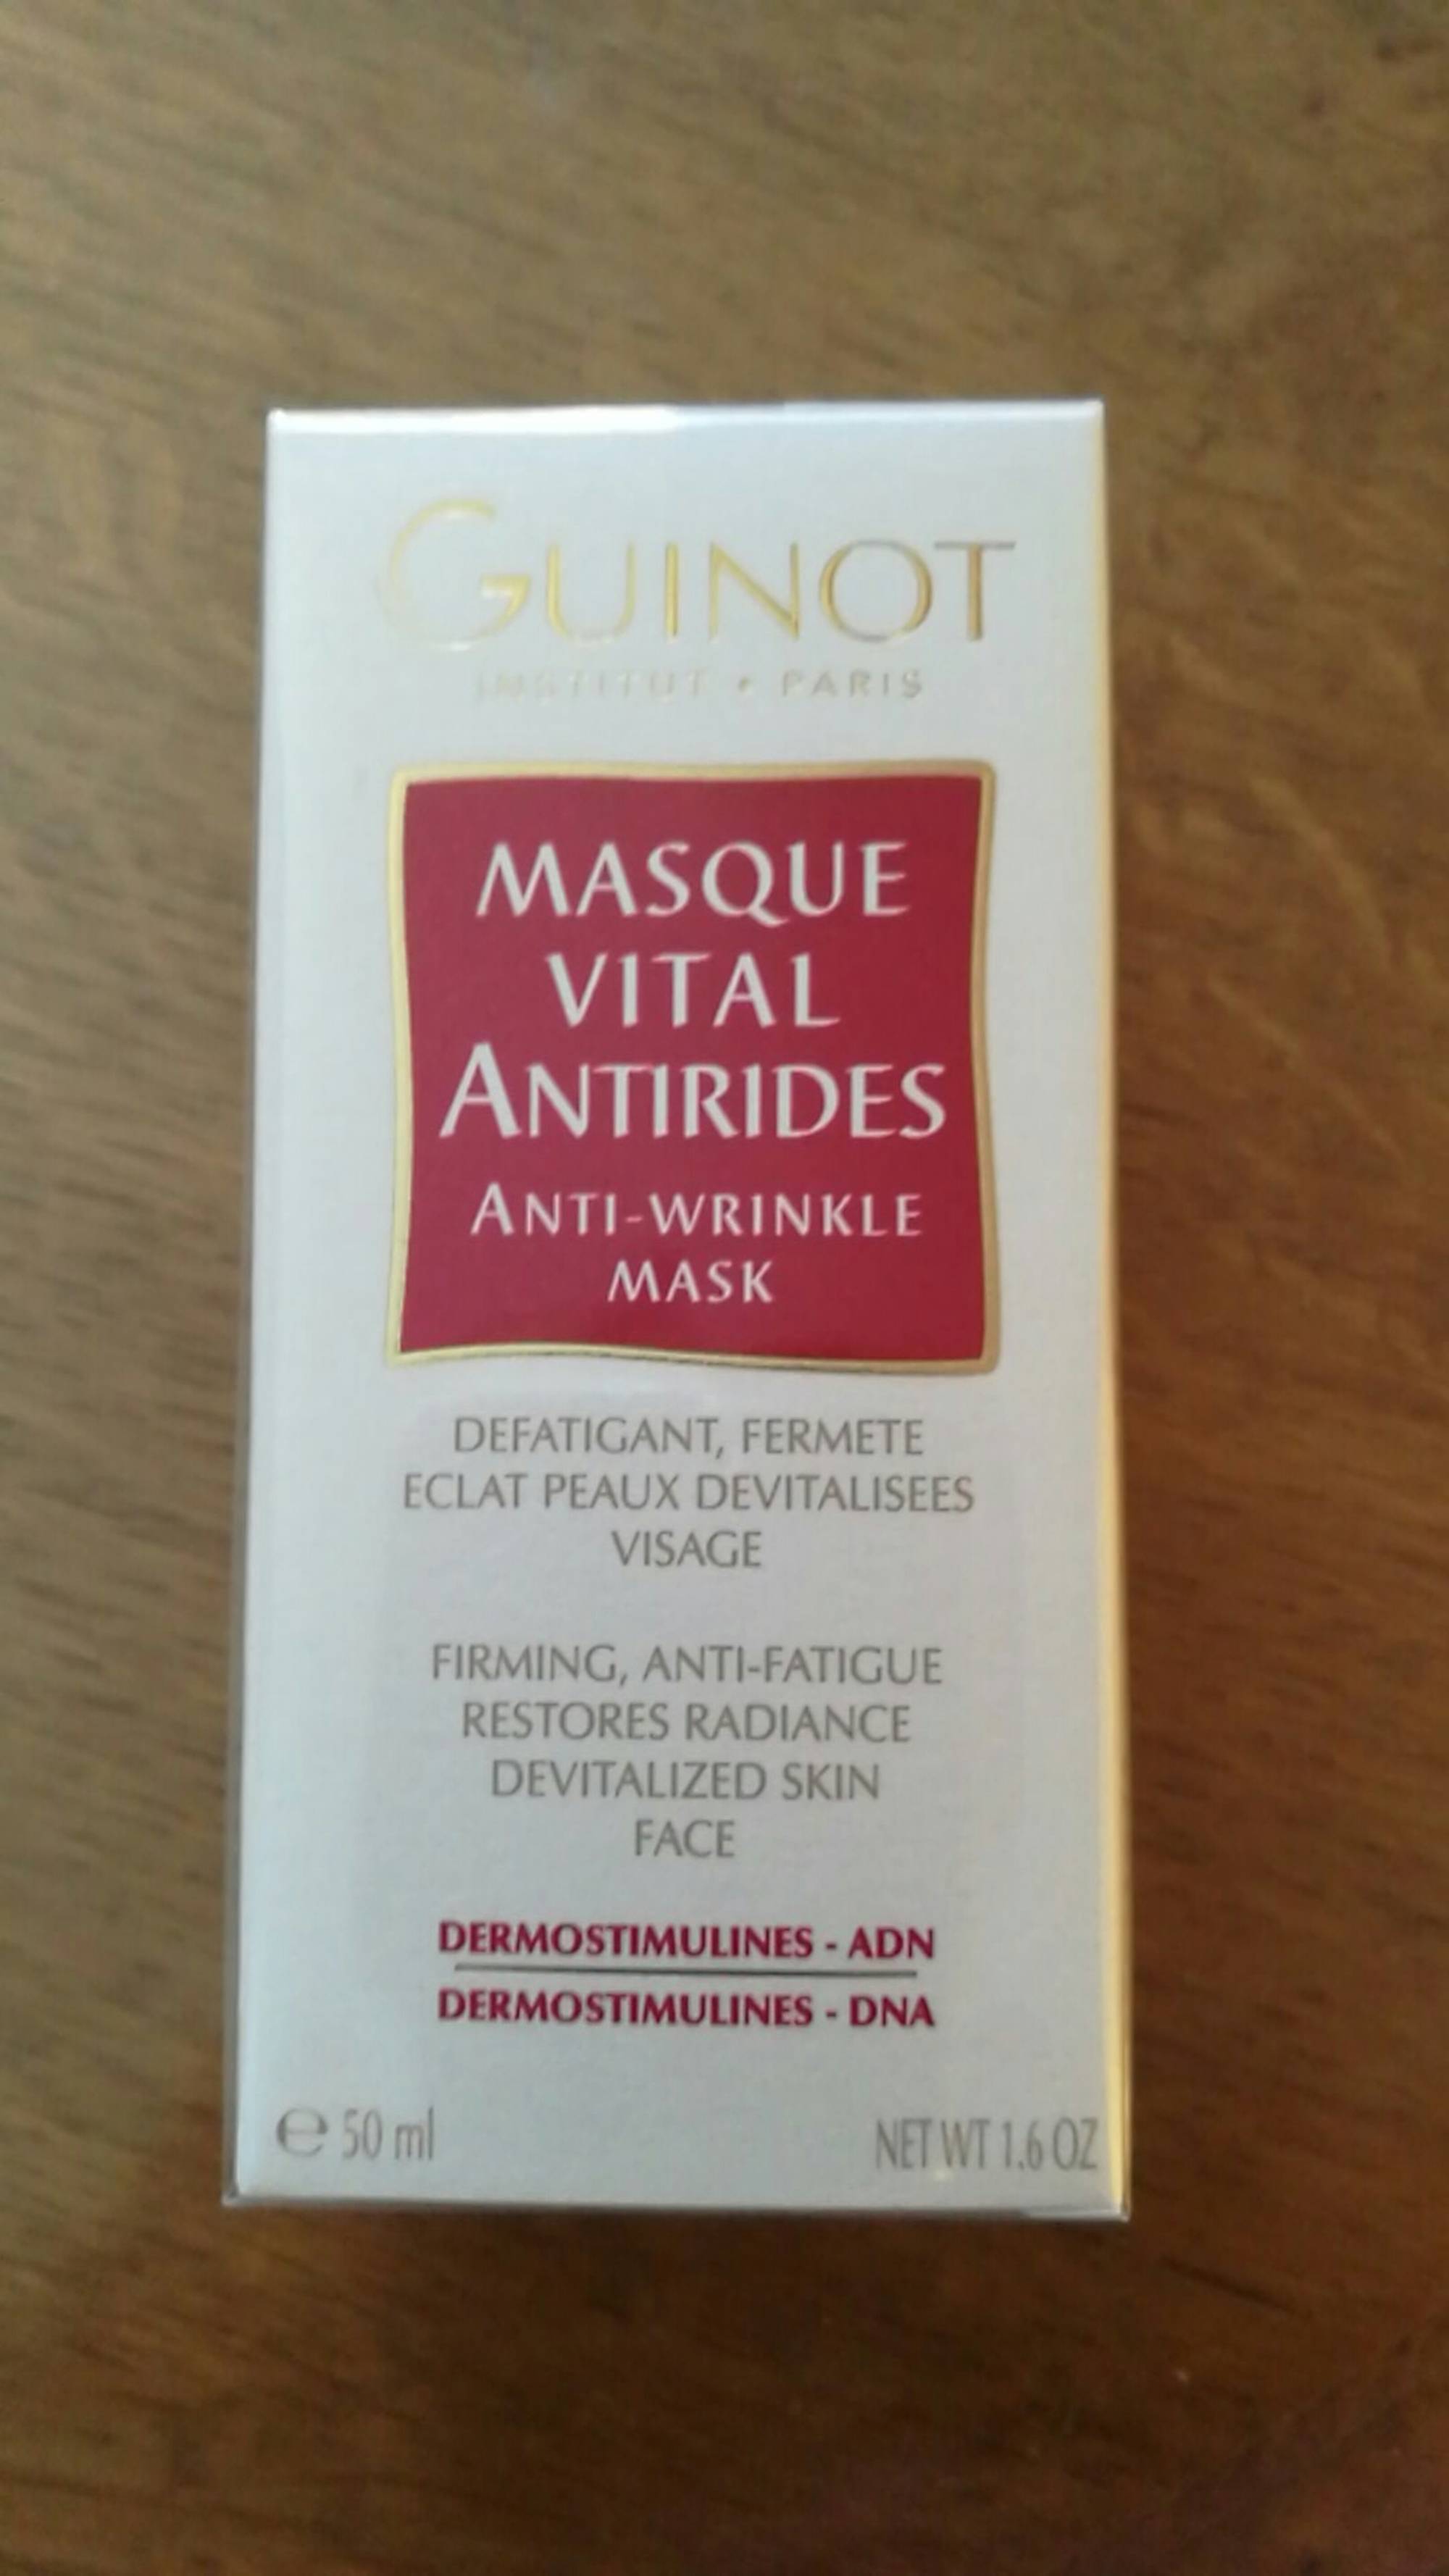 GUINOT - Masque vital antirides